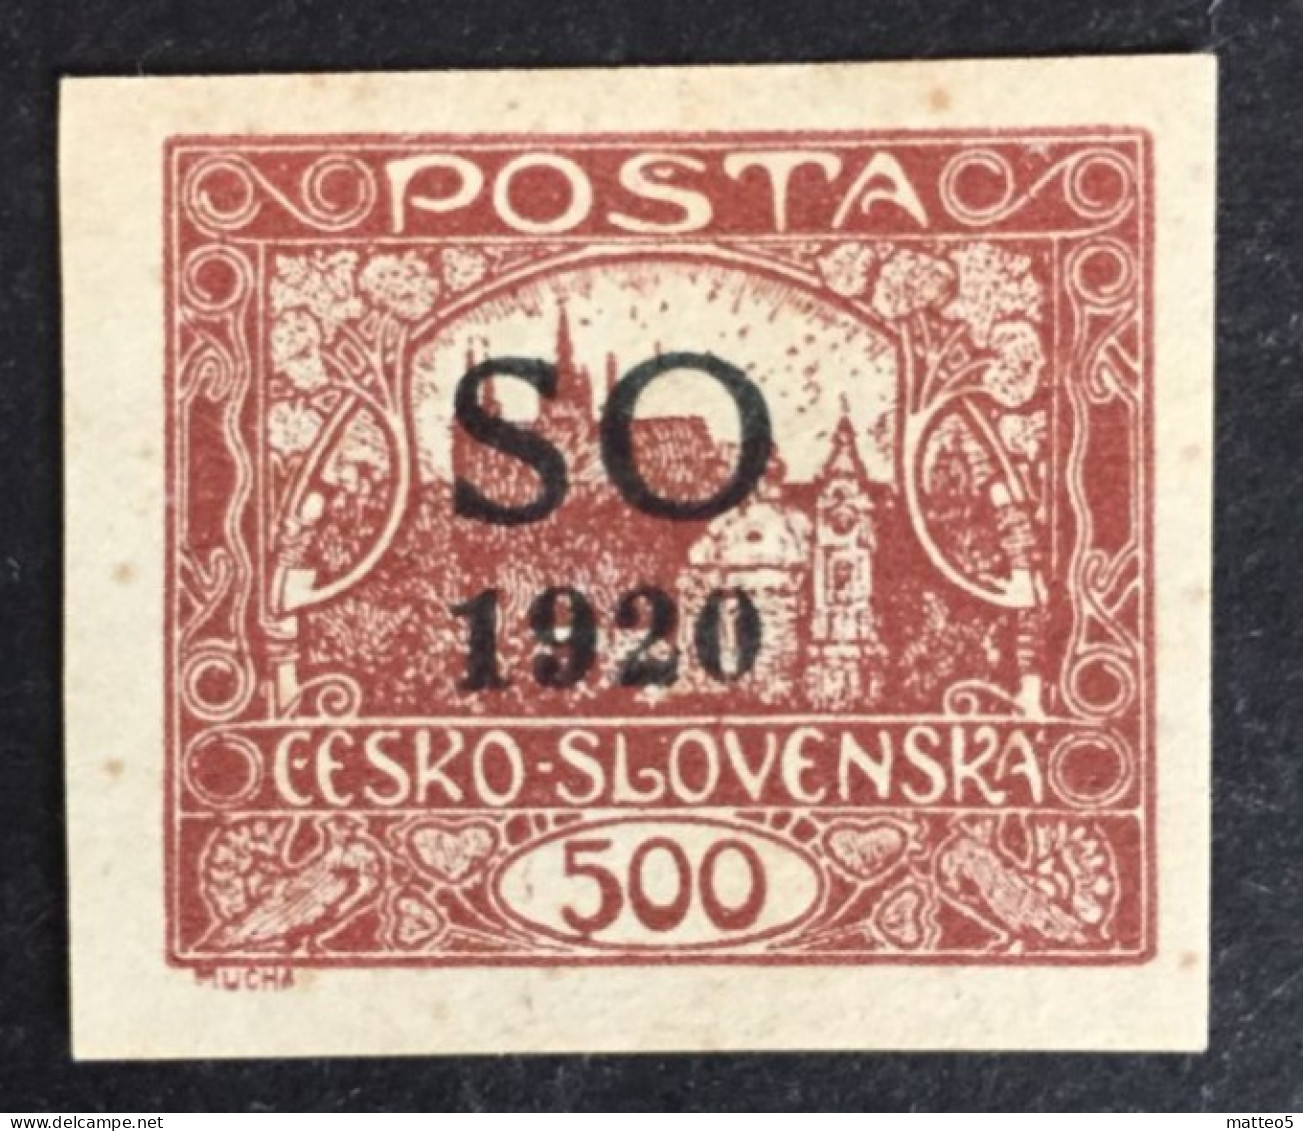 1920 Poland Eastern Silesia Czechoslovakia - Hradcany At Prague Overprint SO 500 - Unused ( Mint Hinged) - Slesia